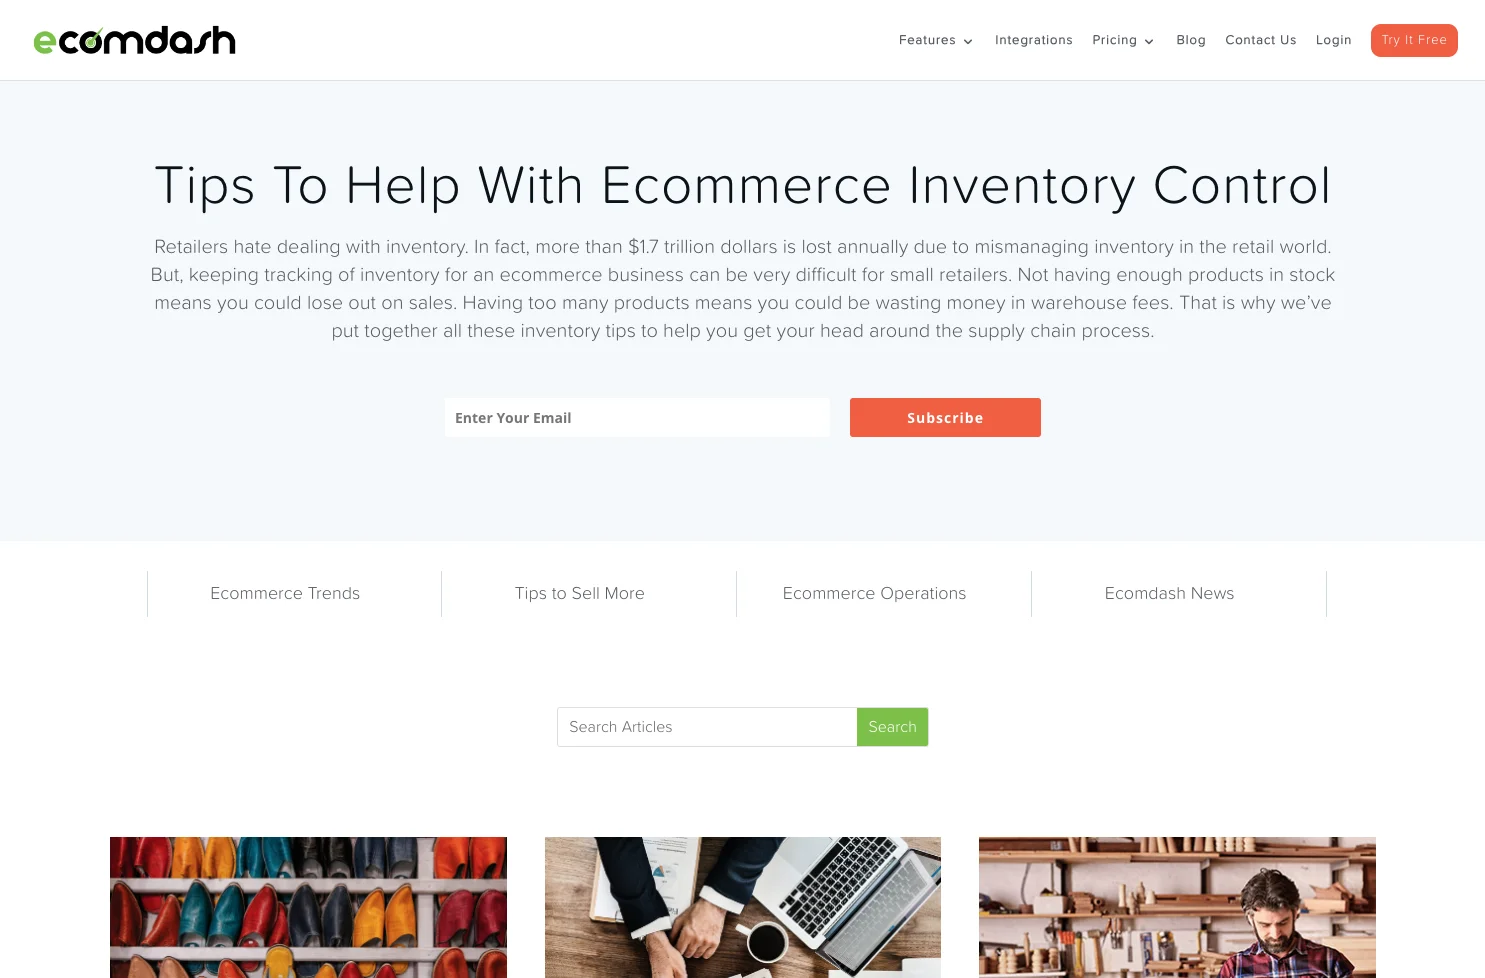 The blogs for e-commerce professional: Ecomdash